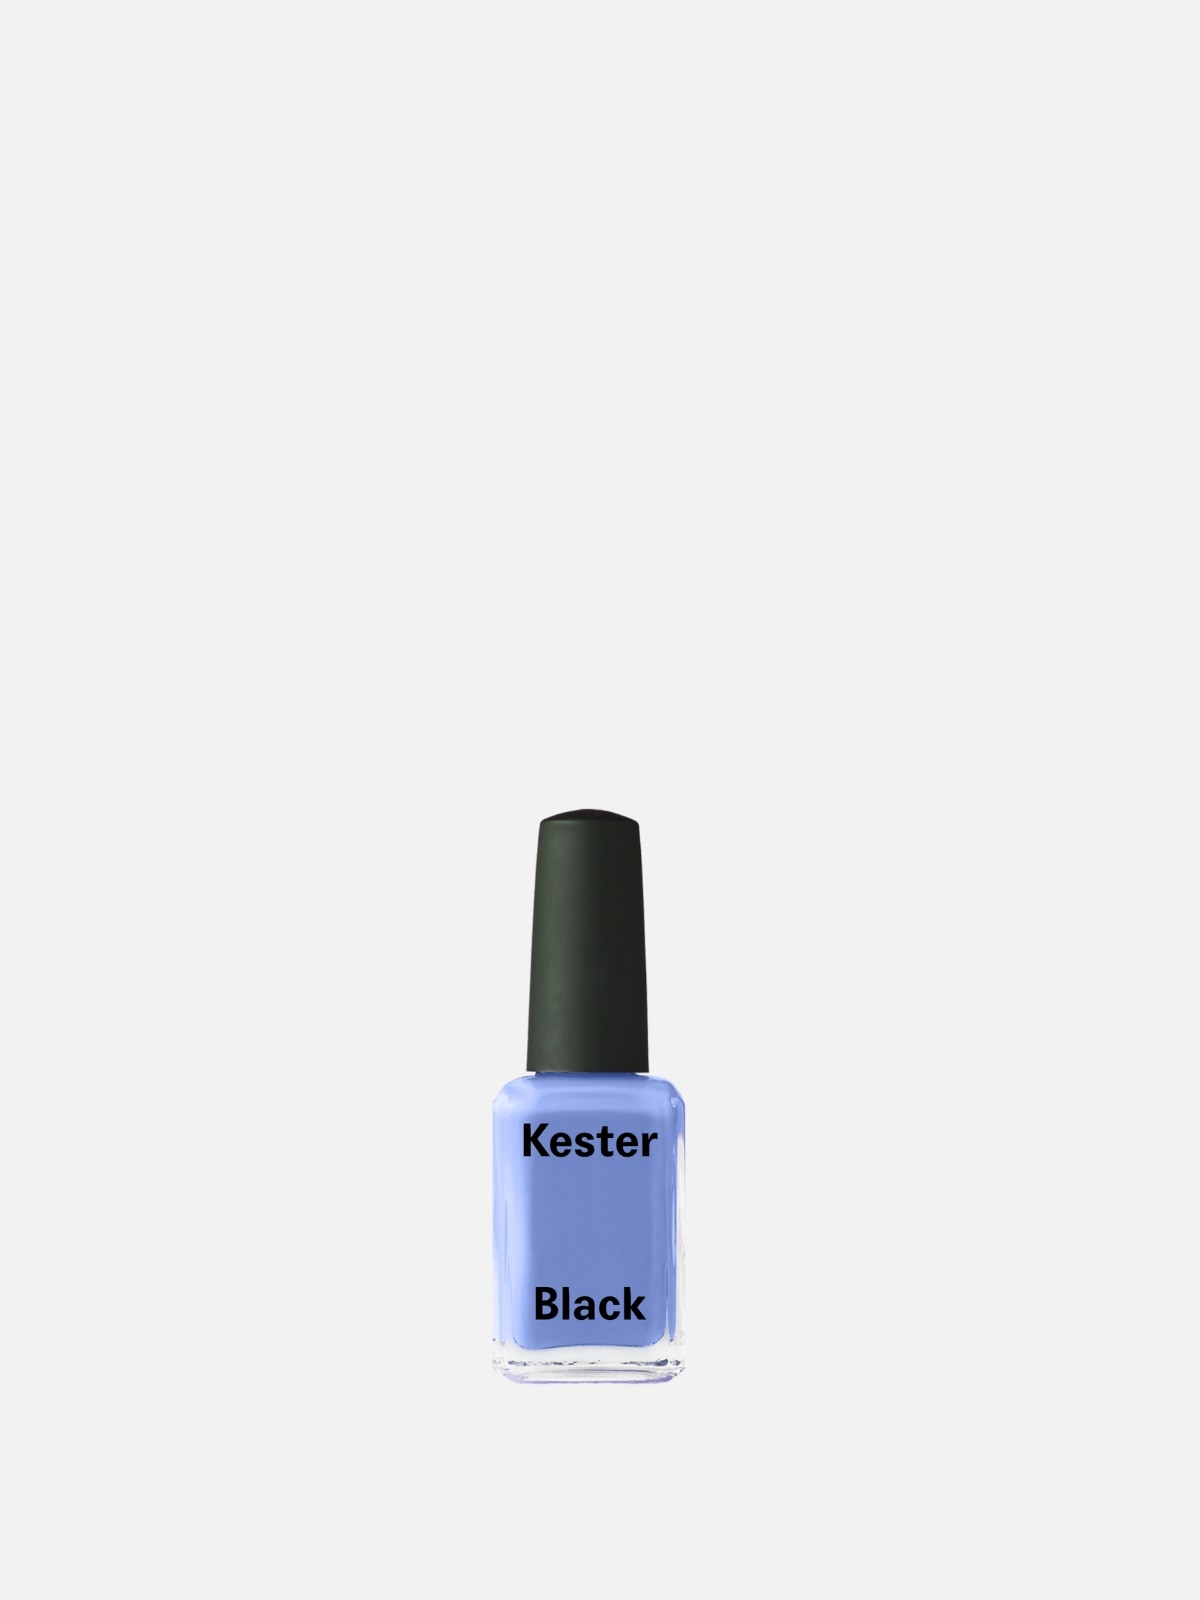 Kester Black - Aquarius - Smalto color glicine